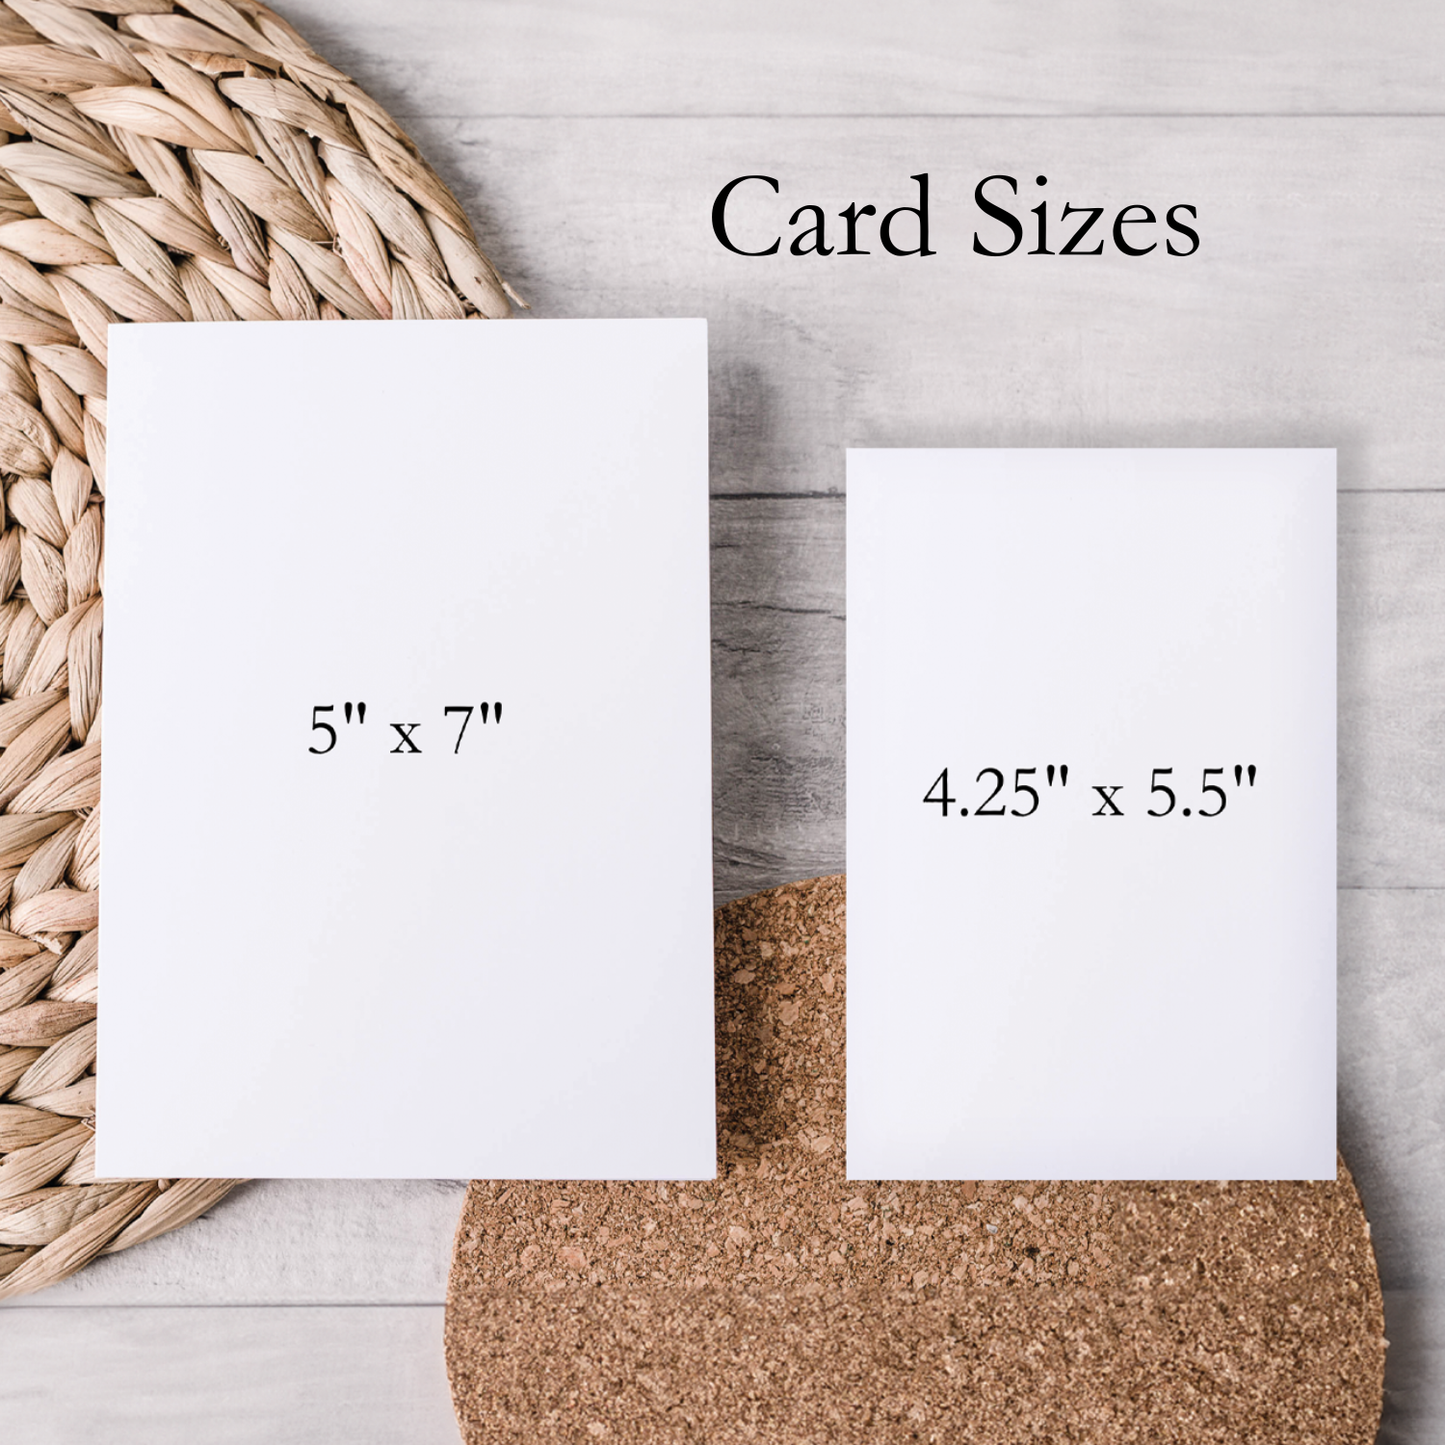 Mom Card: 4.25" x 5.5"